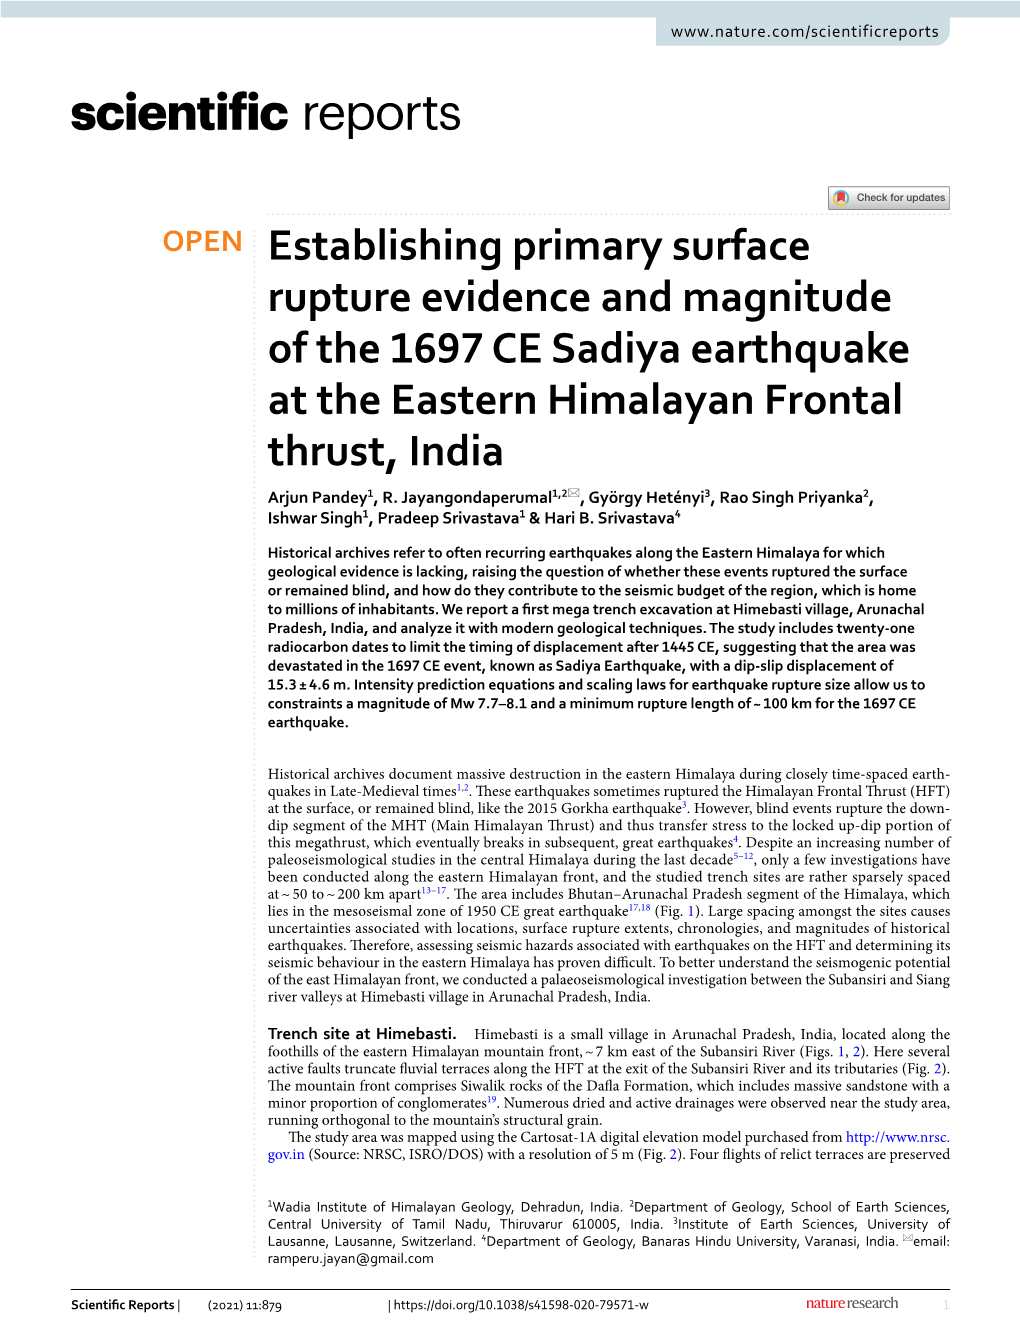 Establishing Primary Surface Rupture Evidence and Magnitude of the 1697 CE Sadiya Earthquake at the Eastern Himalayan Frontal Thrust, India Arjun Pandey1, R